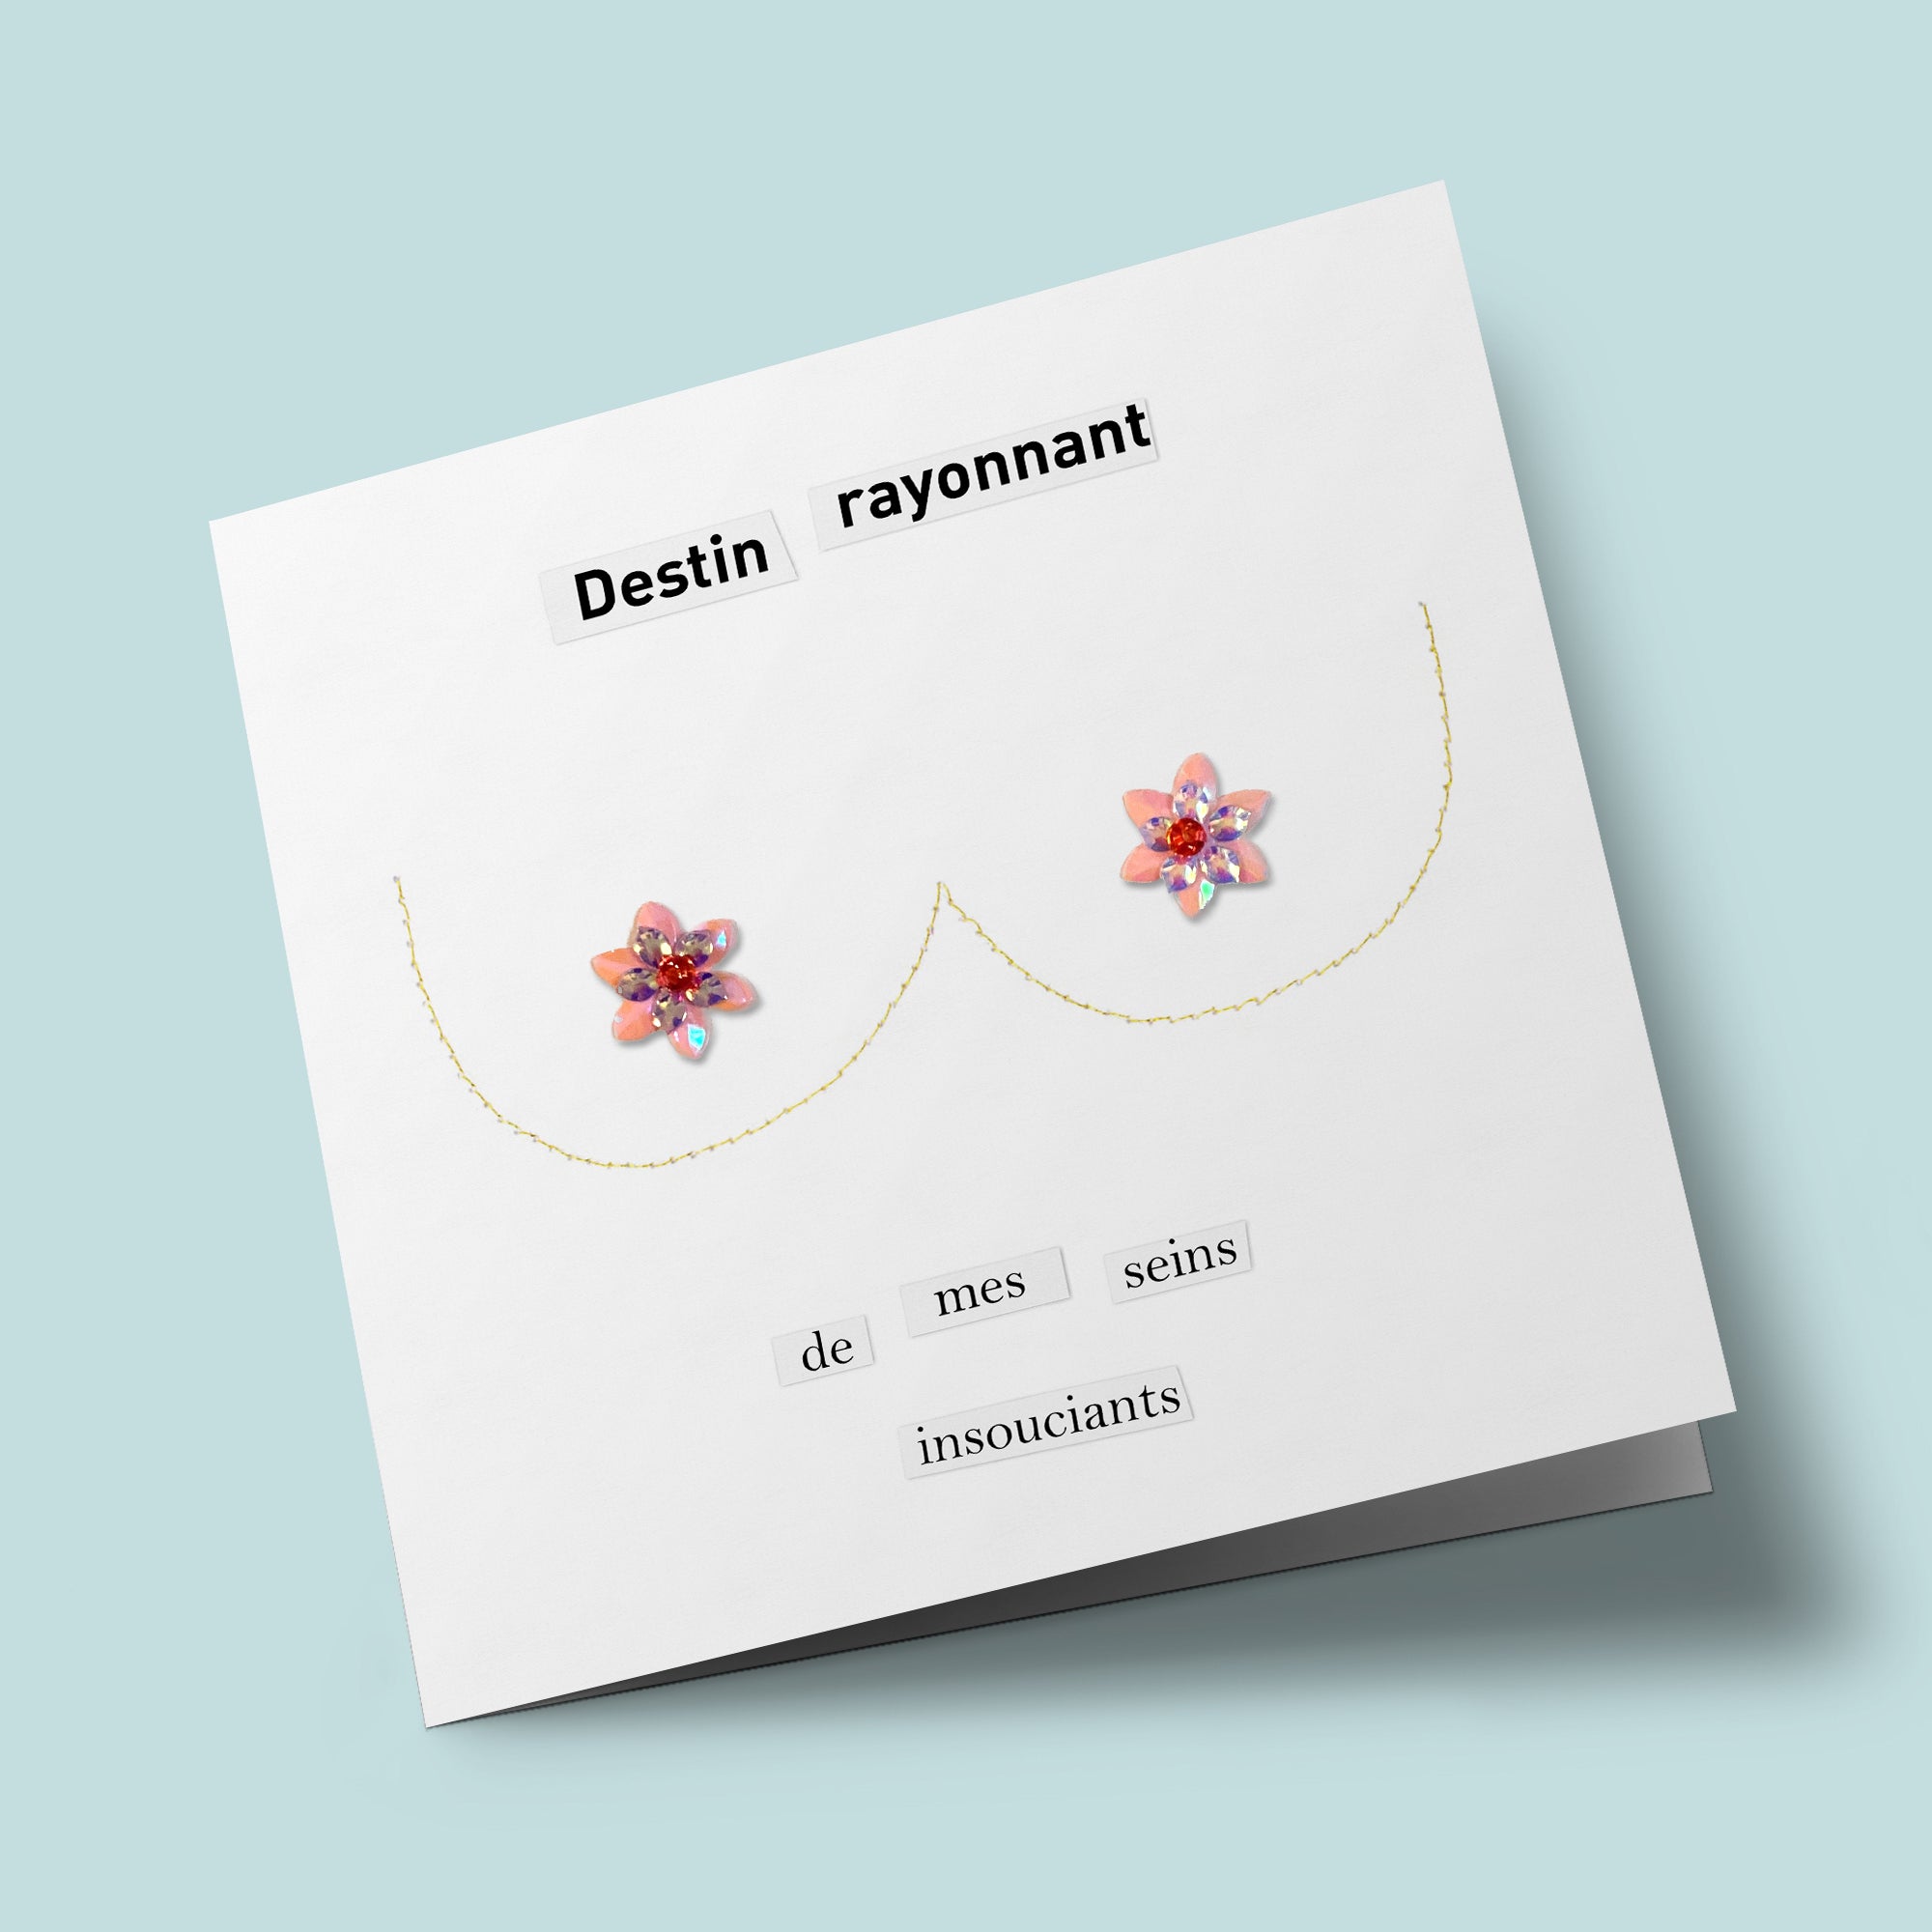 Rosebuds - "Destin rayonnant" - embroidered card